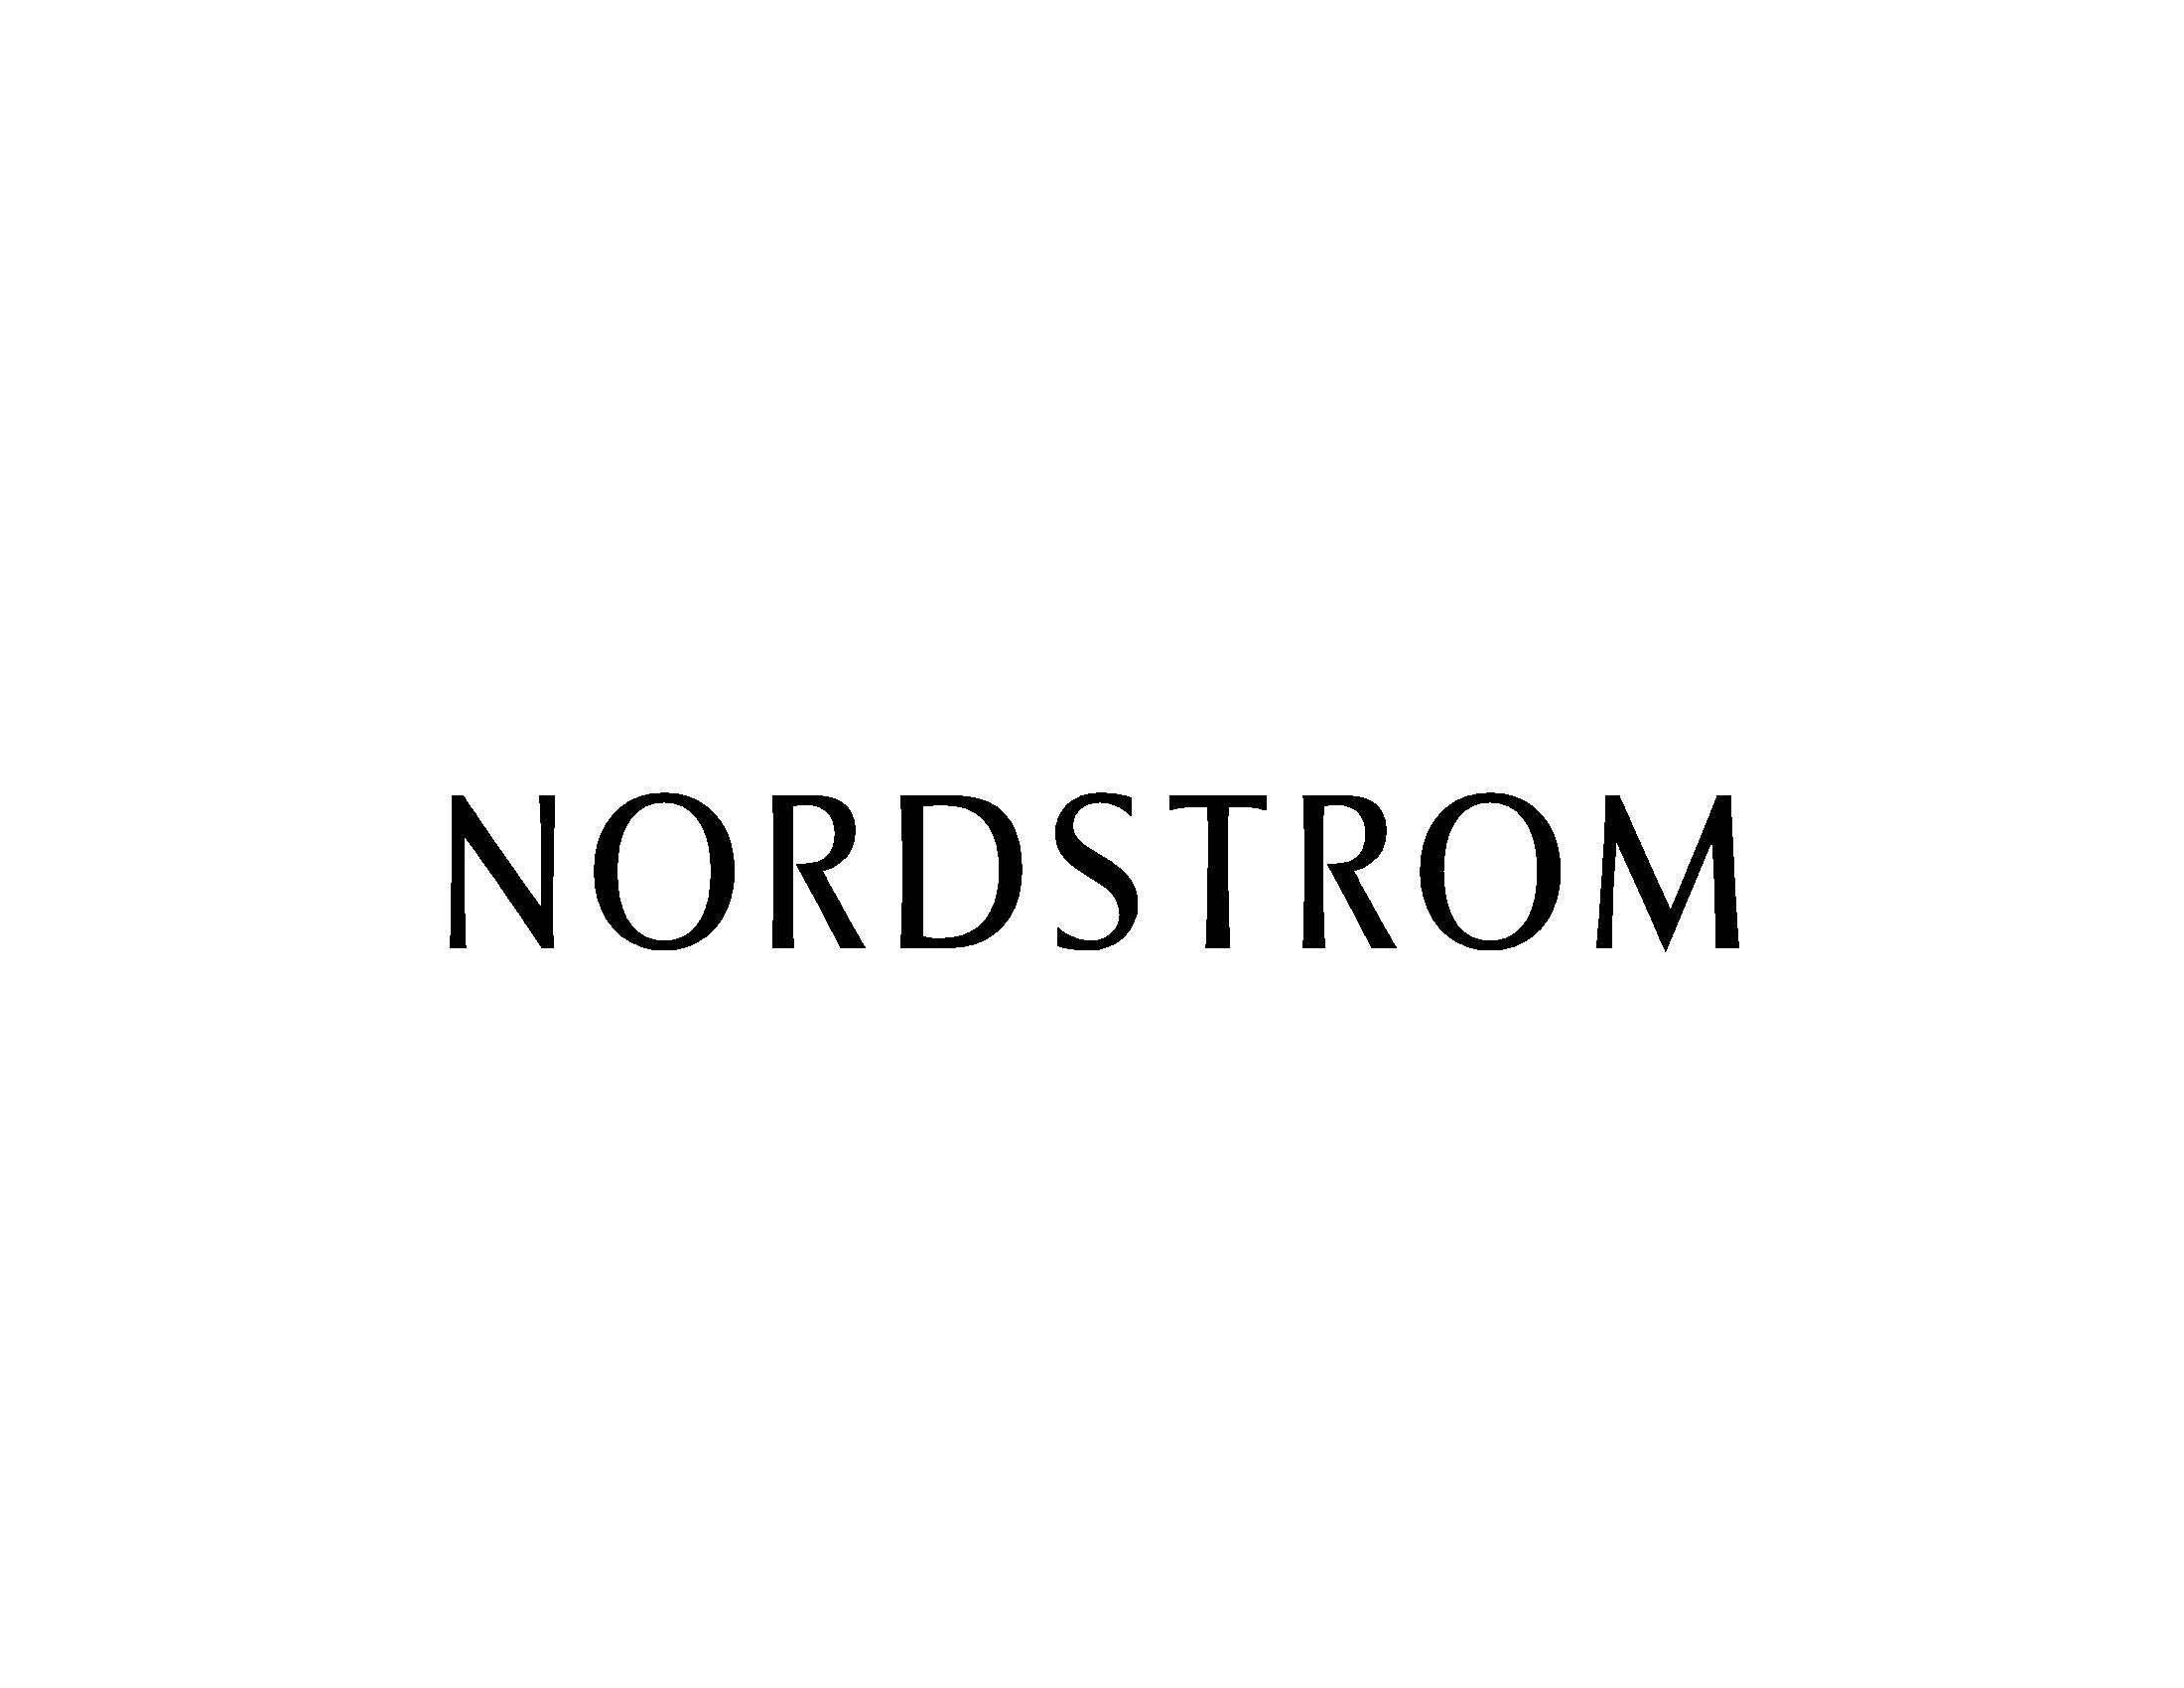 Nordstom Logo - Women In Retail Leadership Circle. Why Nordstrom Gets It